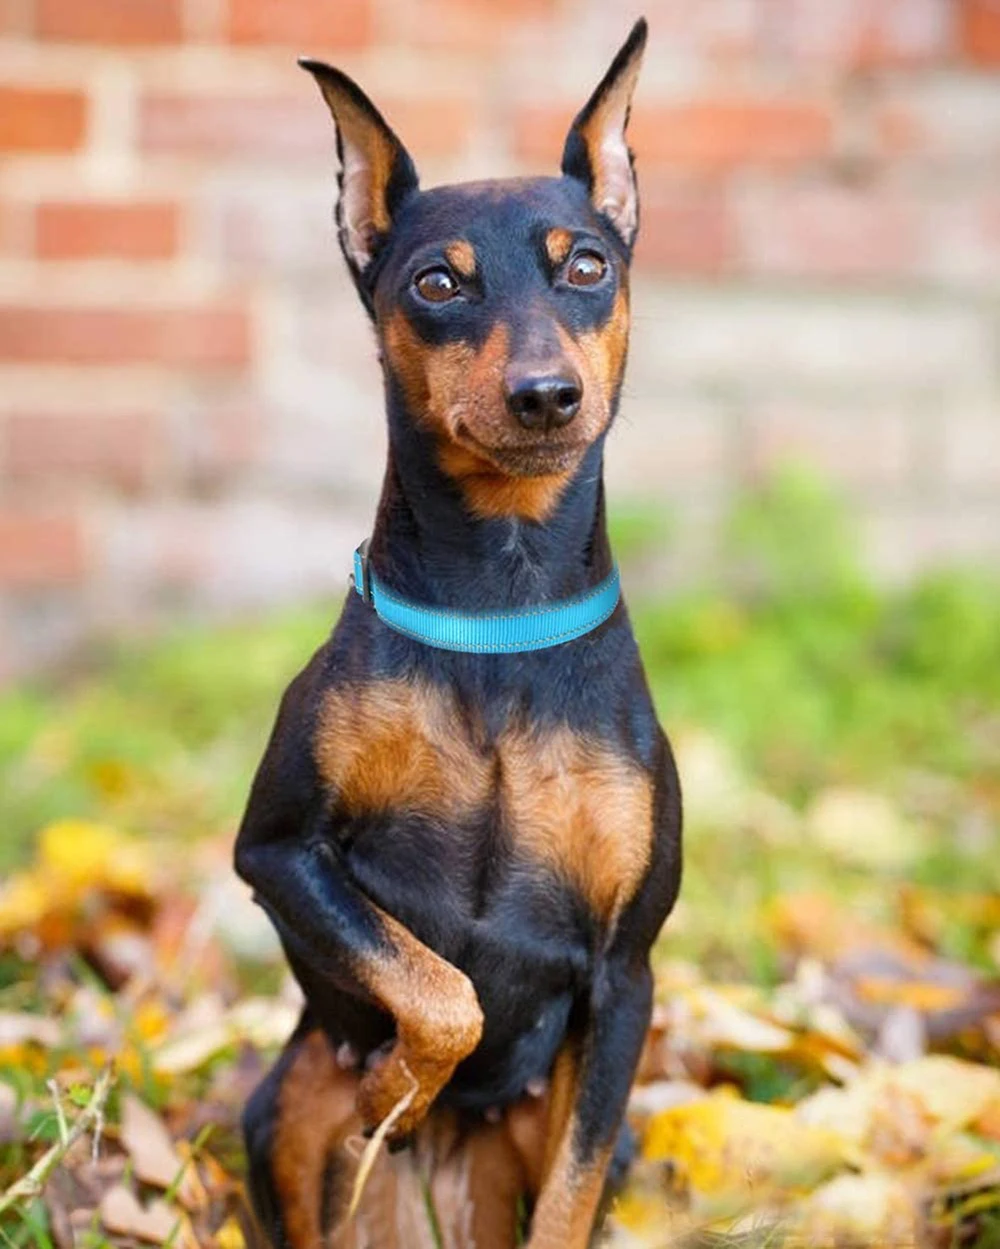 Joytale Reflective Dog Collar,12 Colors,Soft Neoprene Padded Breathable Nylon Pet Collar Adjustable for Small Medium Large Extra Large Dogs,5 Sizes